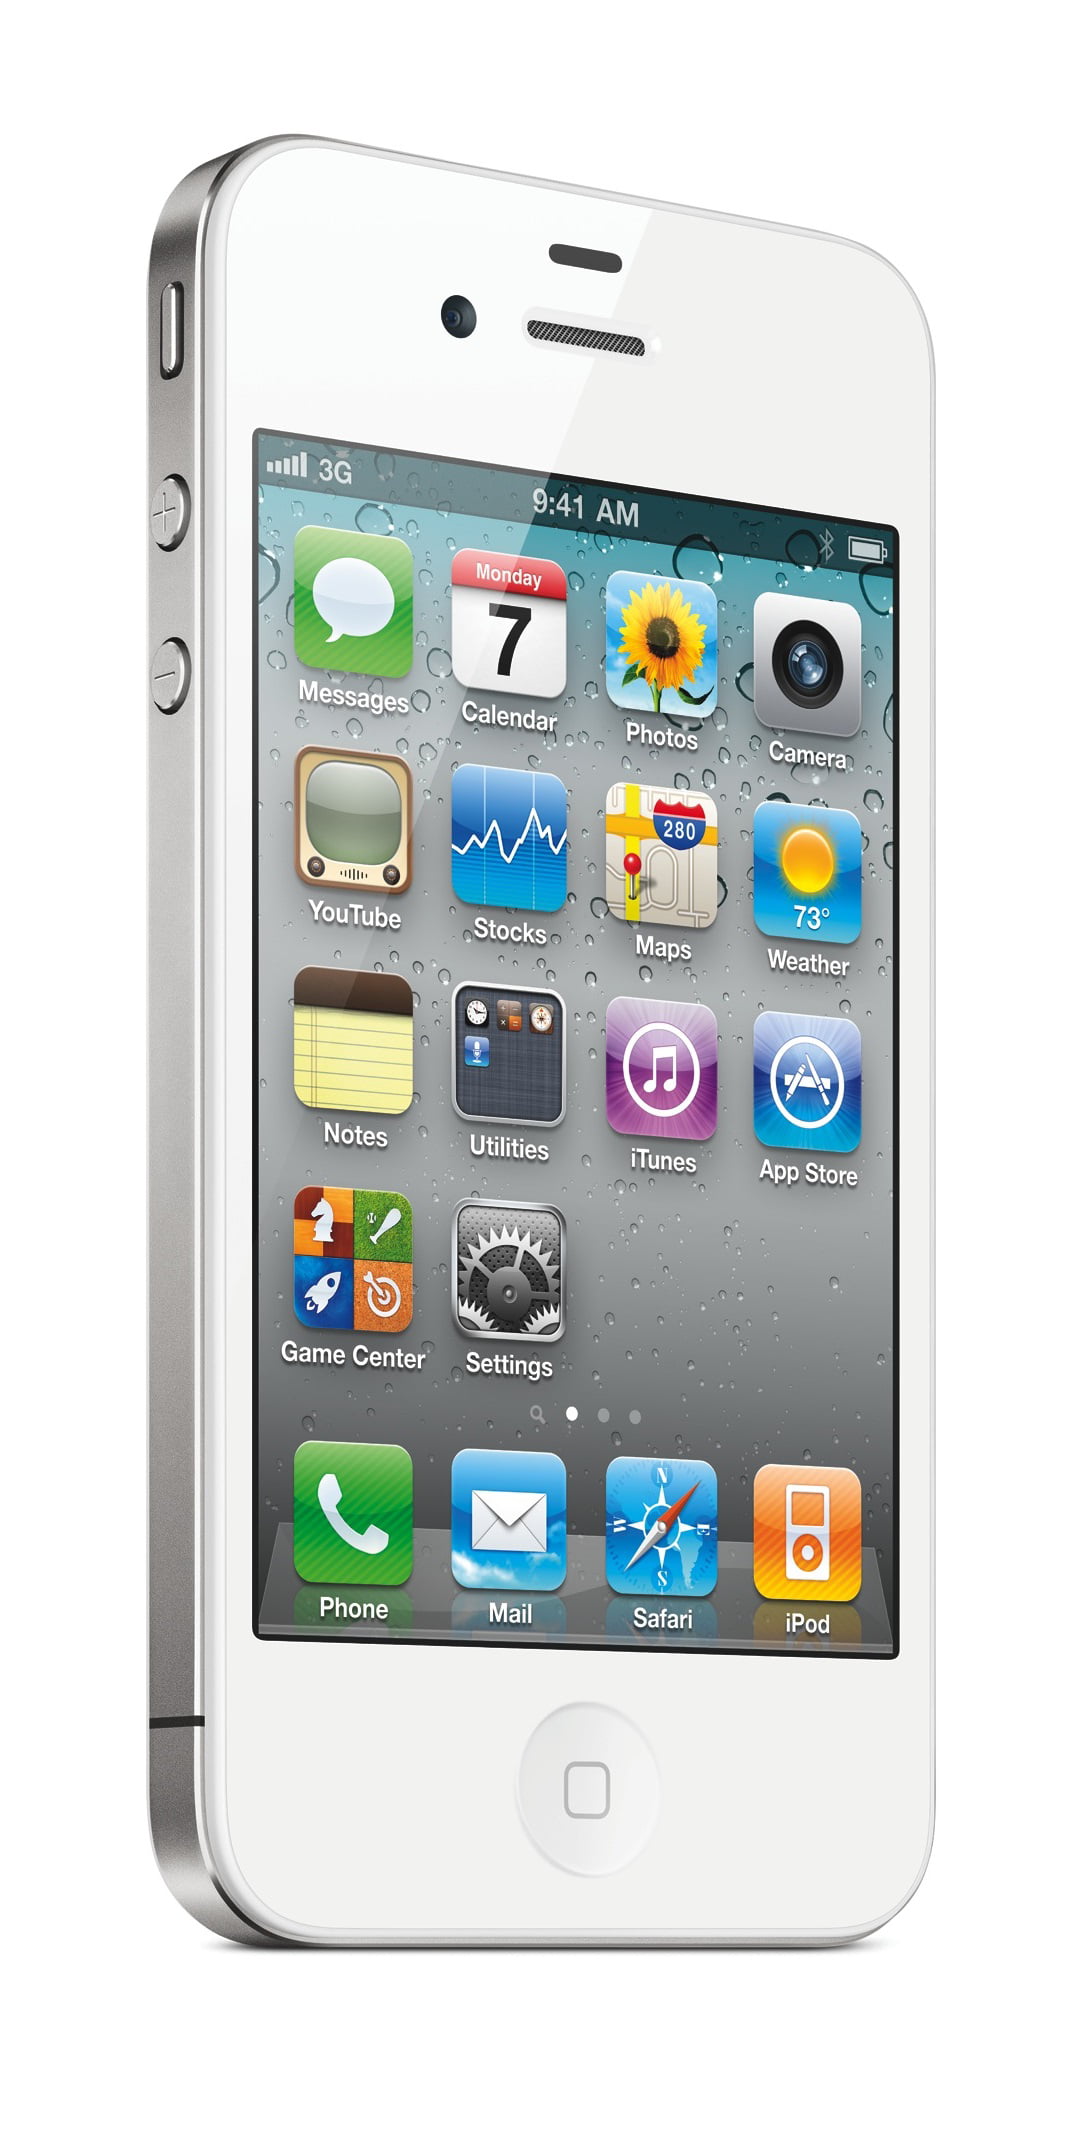 Promoten Machu Picchu Beide Restored Apple iPhone 4 8GB Unlocked GSM Phone - White (Refurbished) -  Walmart.com